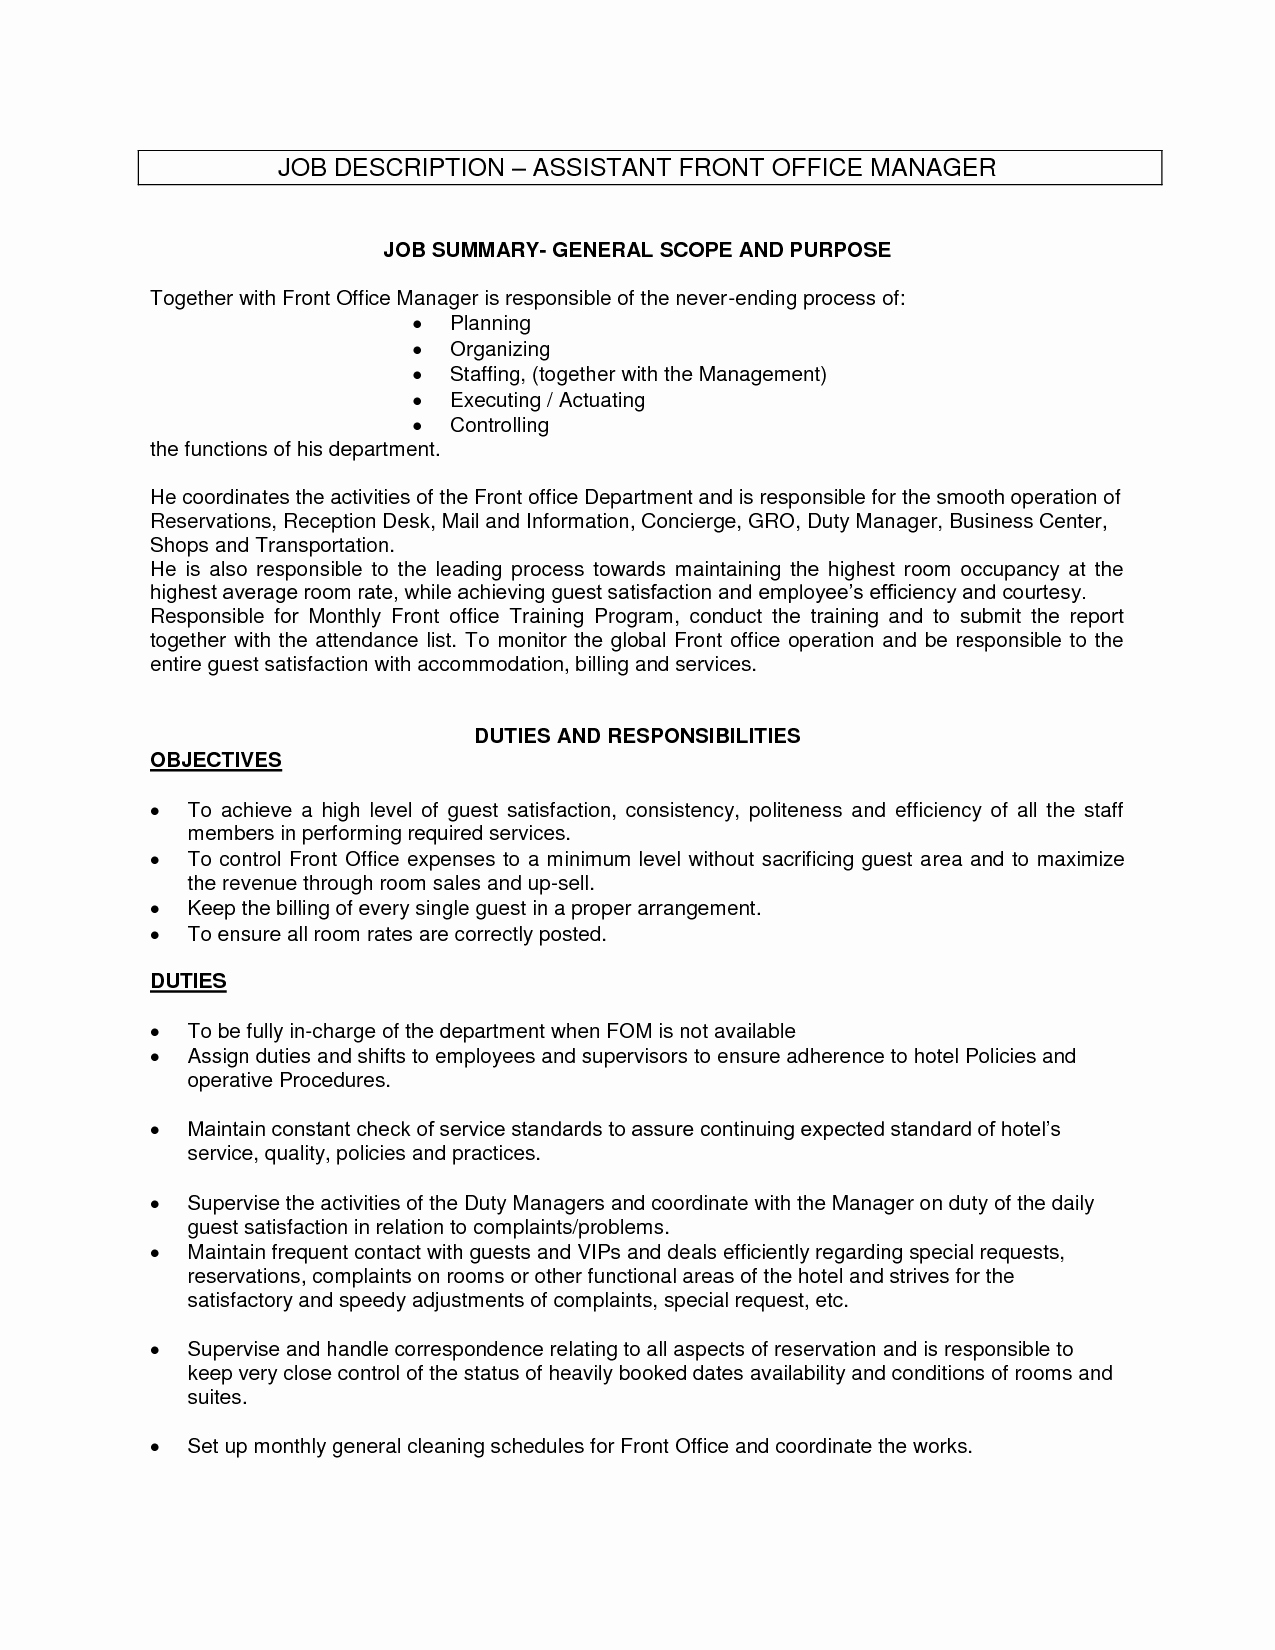 Fice assistant Job Description Resume 2016